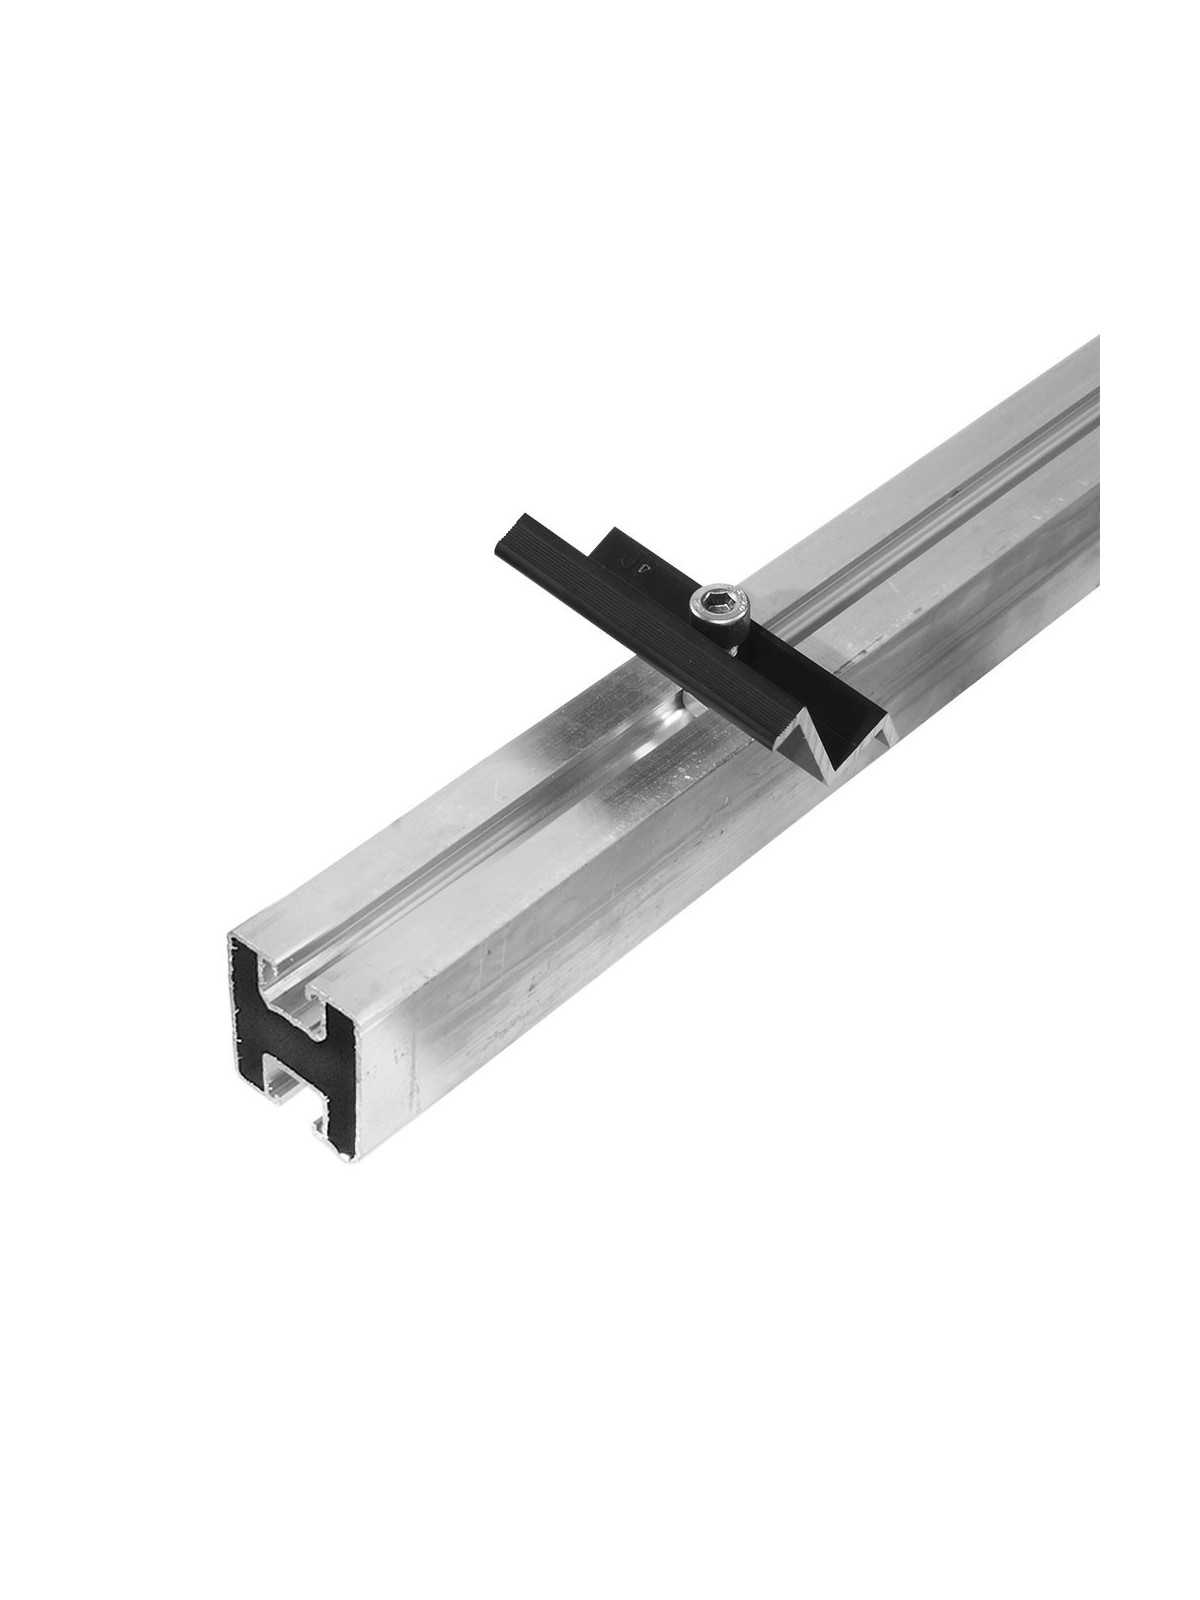 Aluminum rail for mounting solar panels (35mm x 40mm)